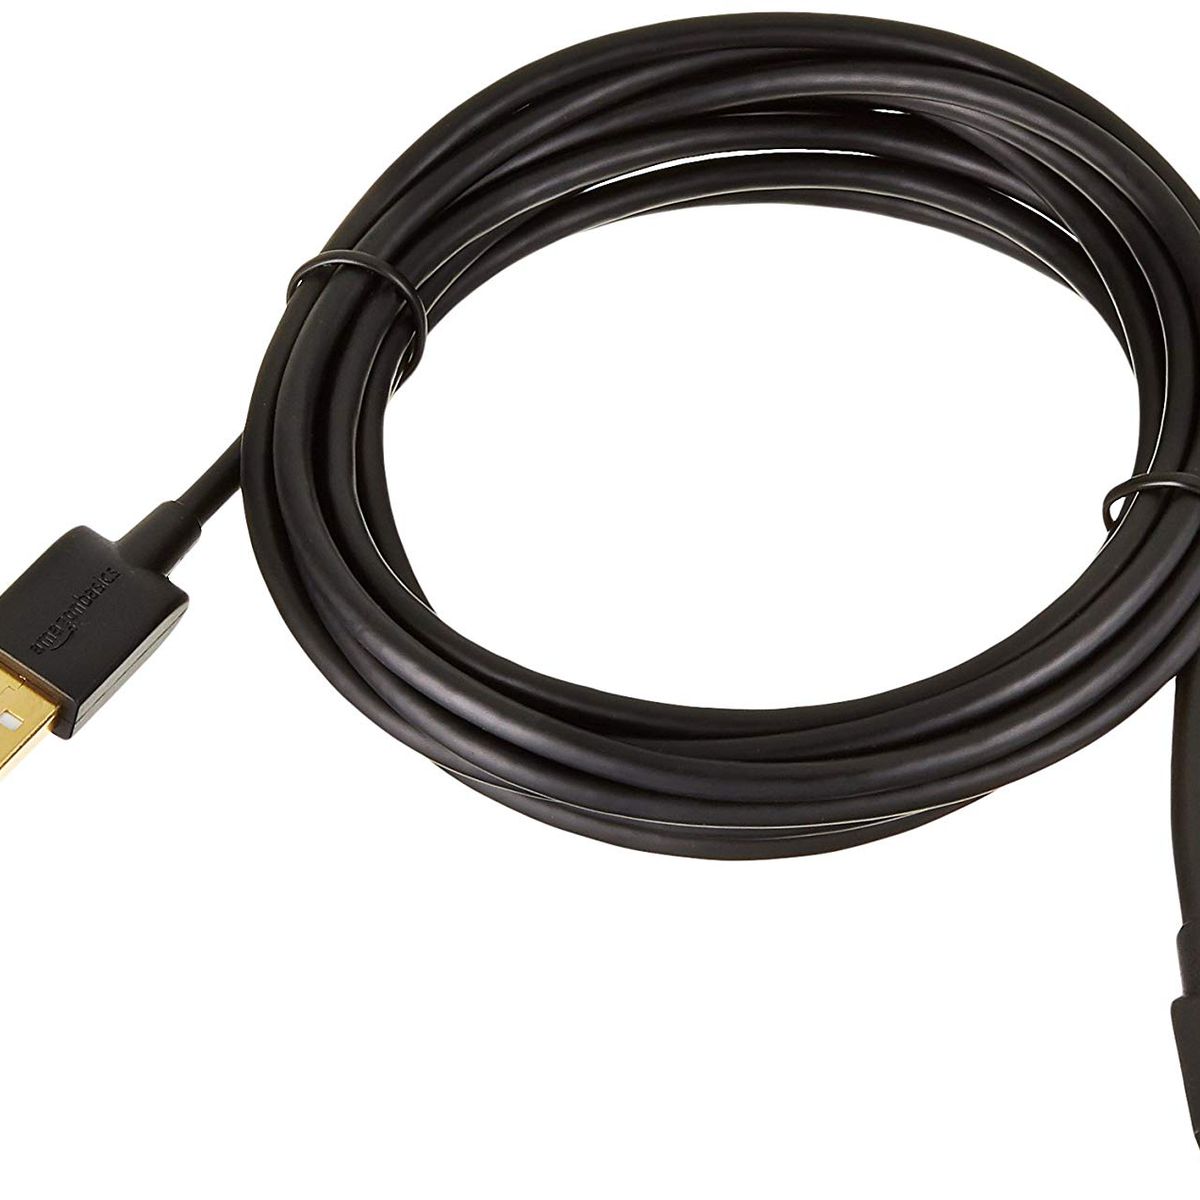 Product shot of AmazonBasics 10-foot micro USB cord